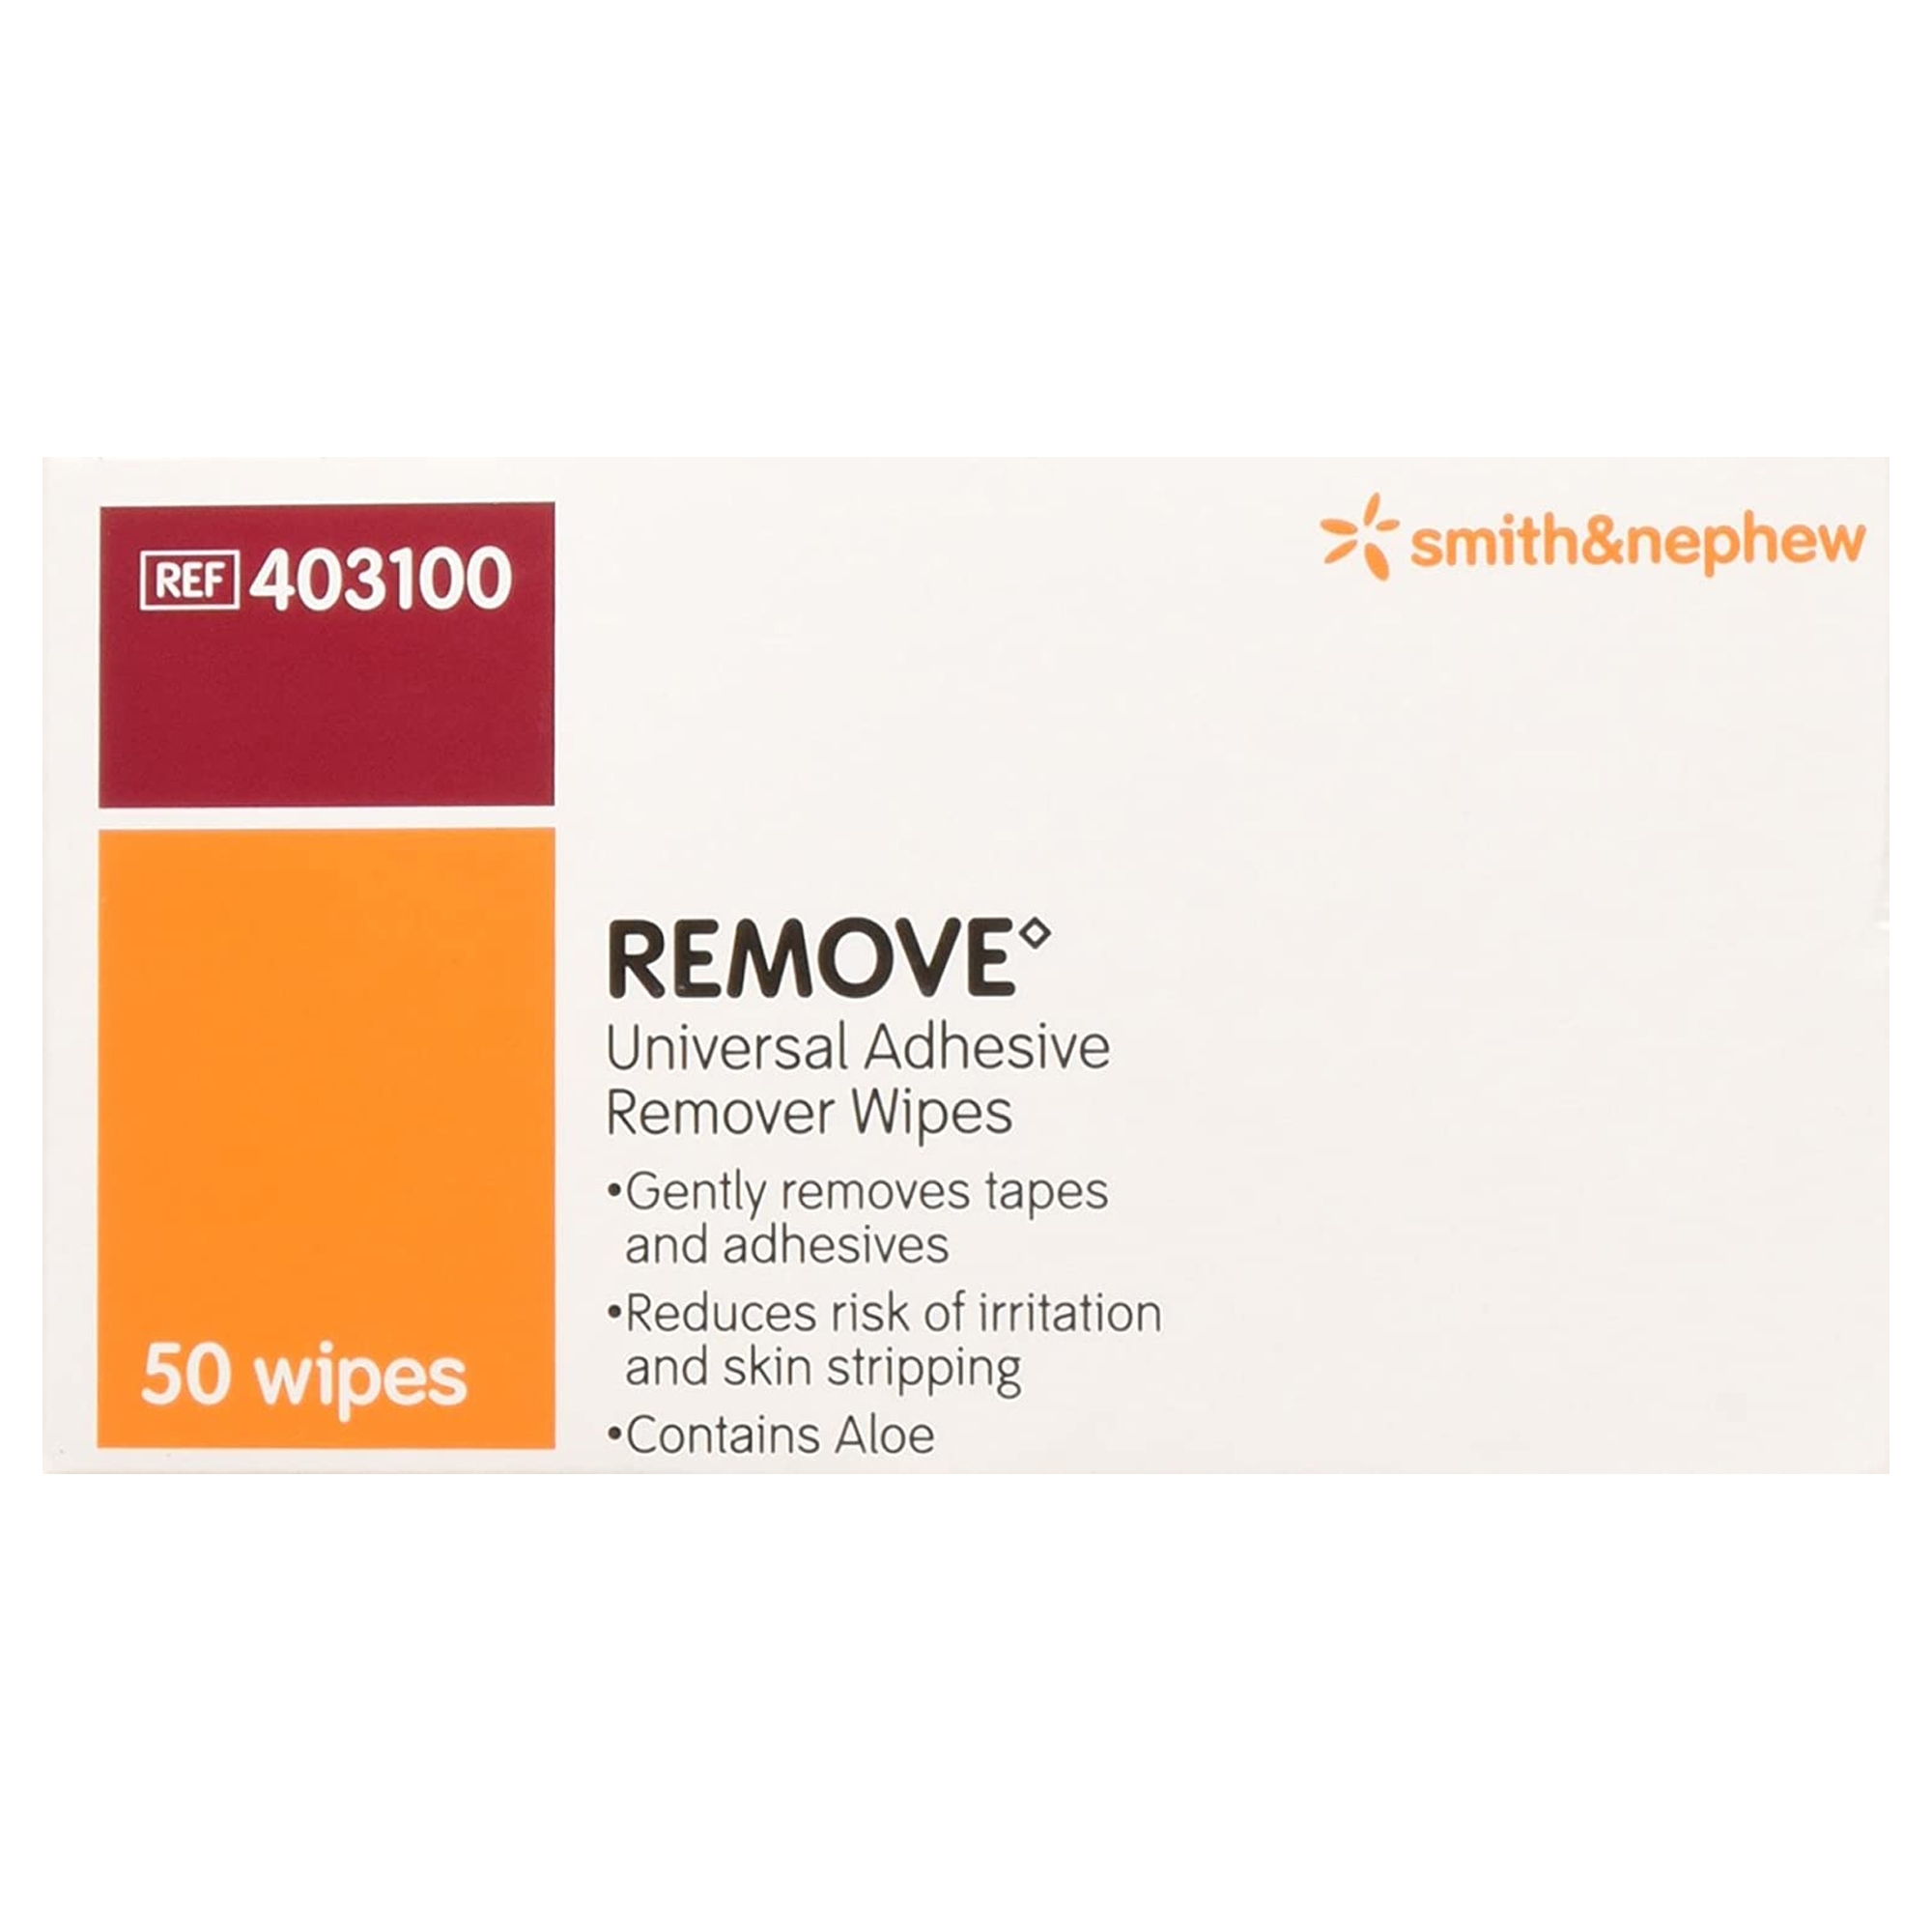 Remove Adhesive Remover Wipe 403100, 50 Ct - image 3 of 3